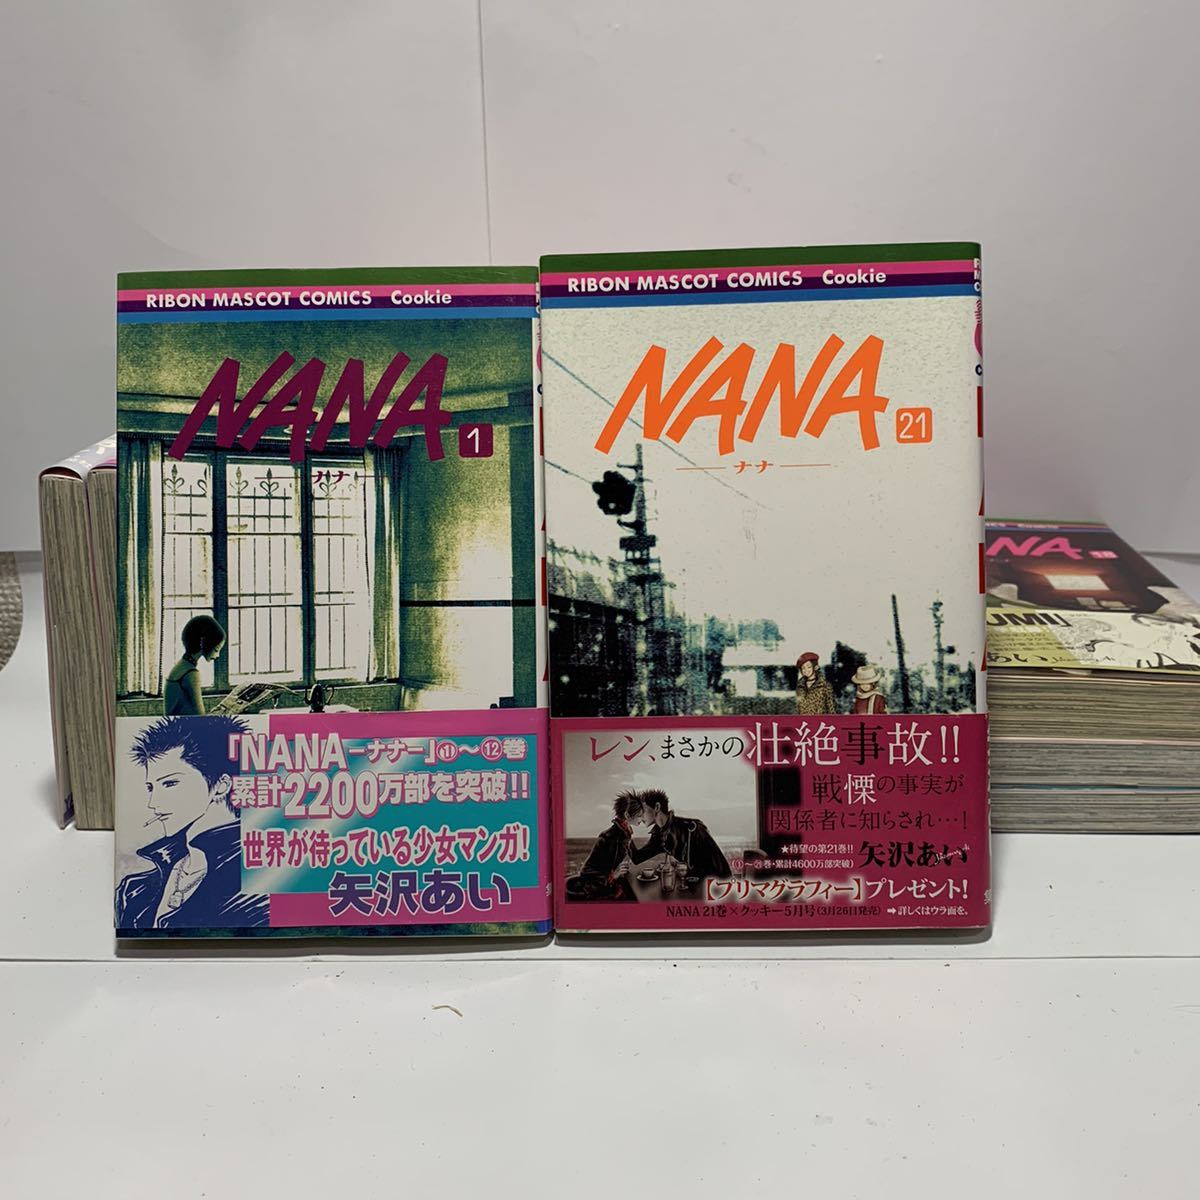 Nanaナナ21巻の値段と価格推移は 21件の売買情報を集計したnanaナナ21巻の価格や価値の推移データを公開